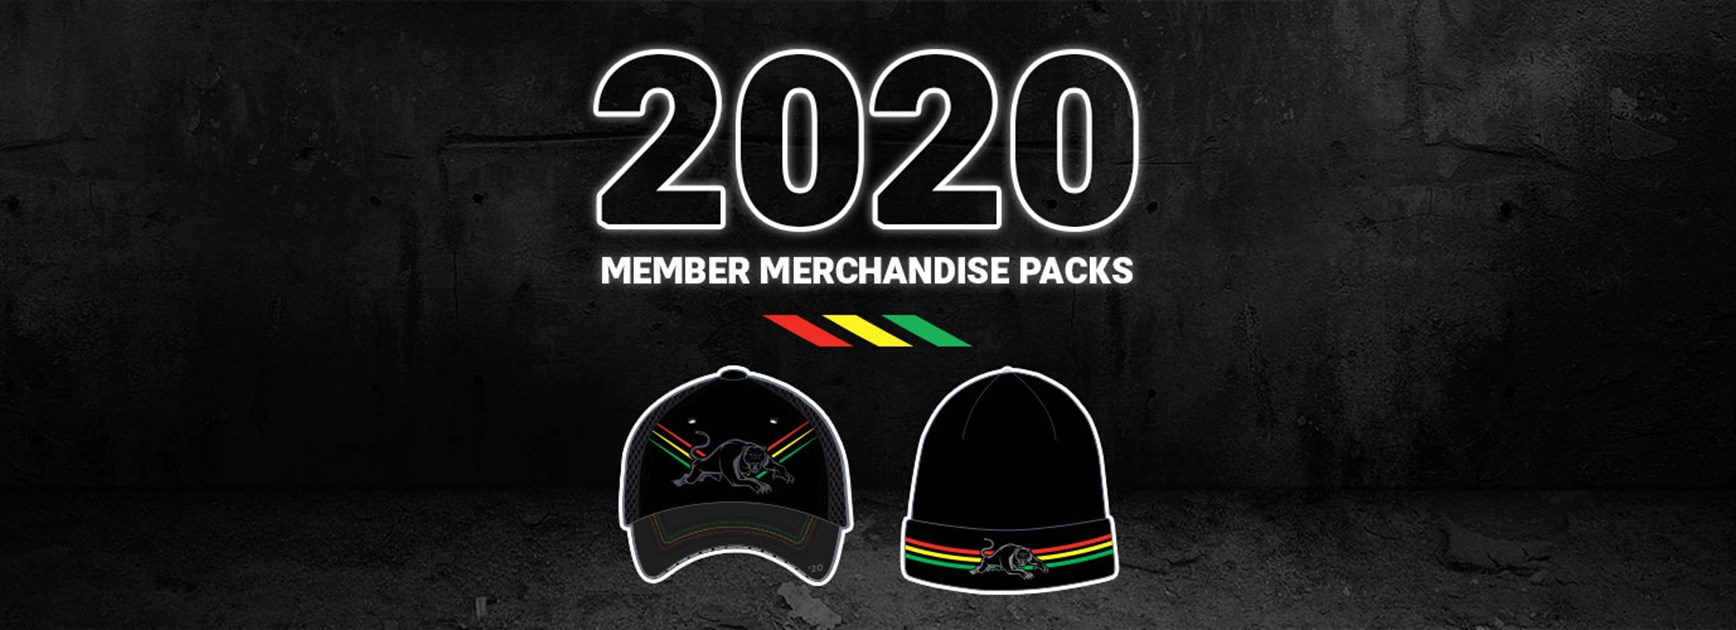 2020 Panthers membership packs revealed